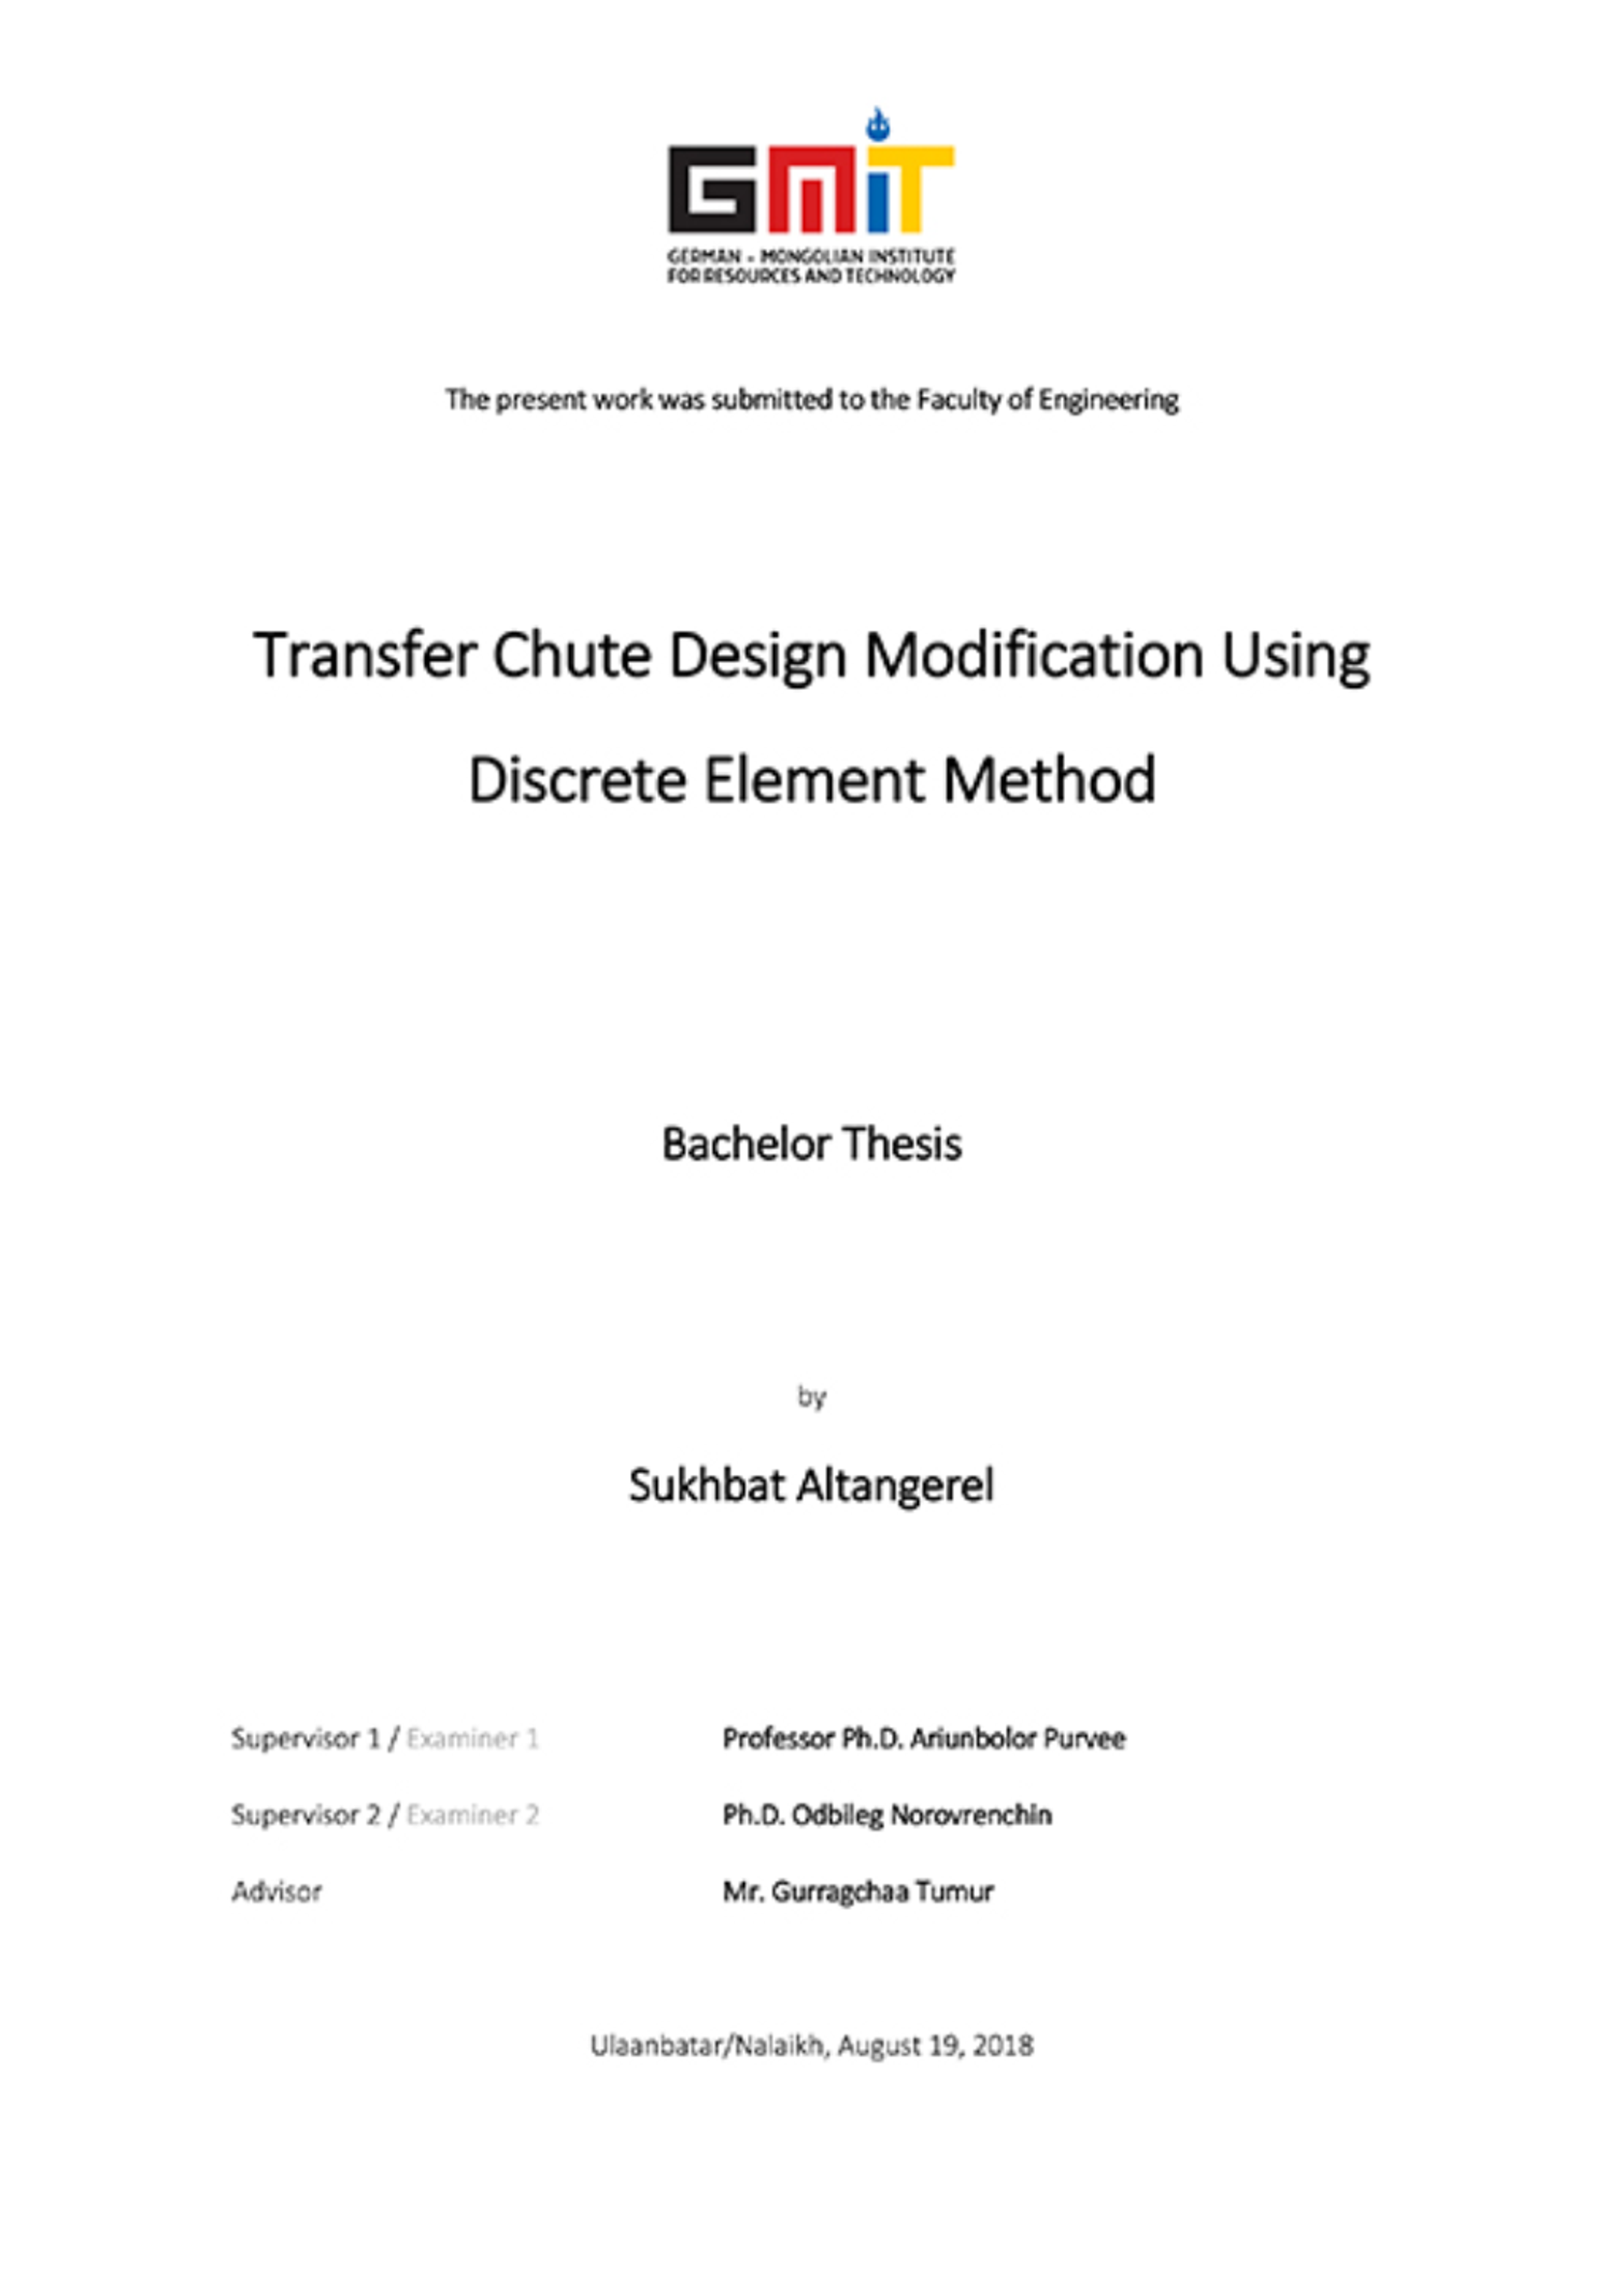 Transfer Chute Design Modification Using Discrete Element Method